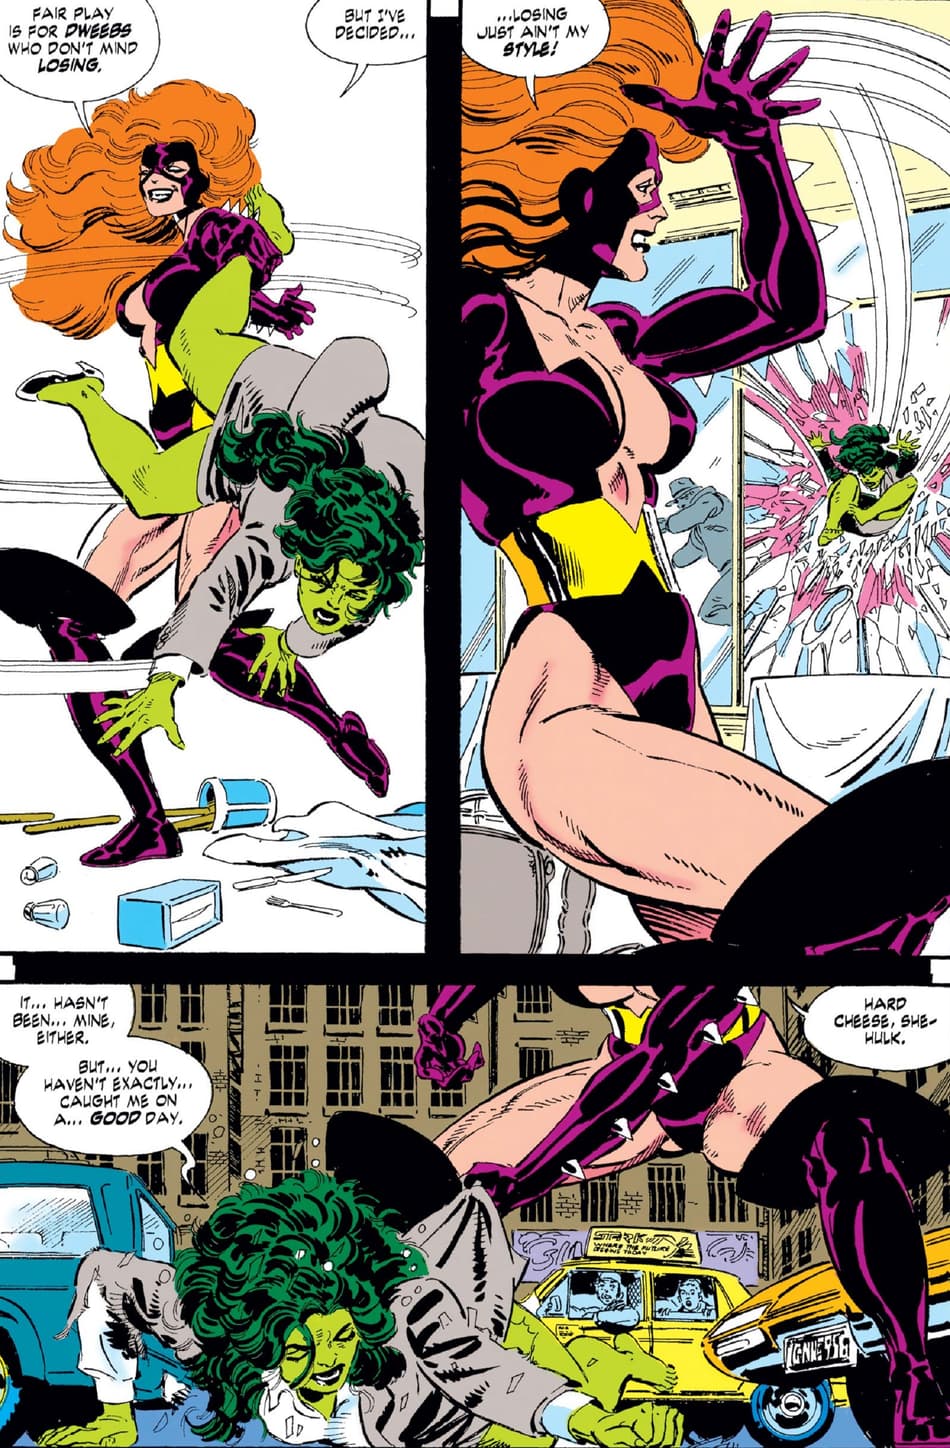 Titania takes on a weakened She-Hulk in SENSATIONAL SHE-HULK (1989) #49.